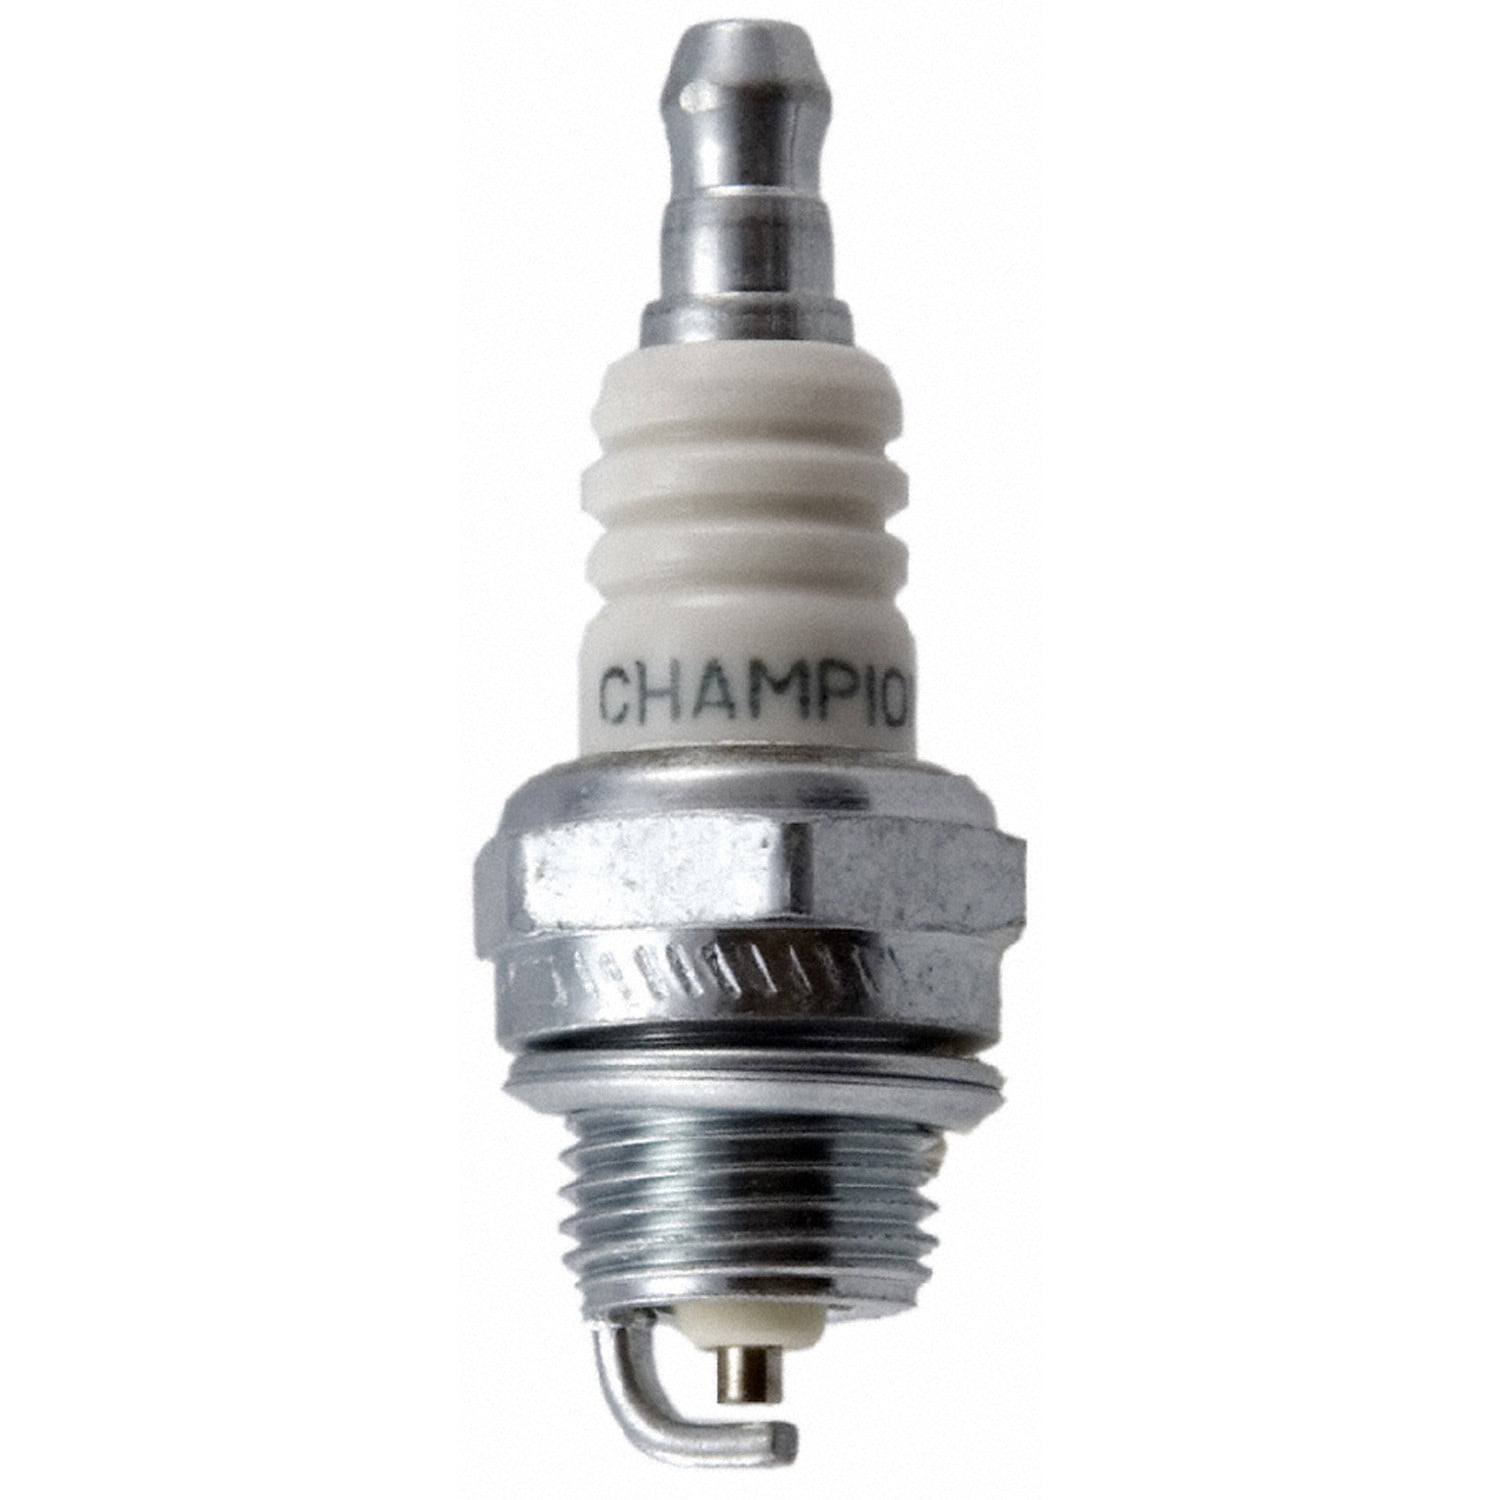 Champion OEM 852 Replacement Rcj6y SM Eng Spark Plug for sale online 